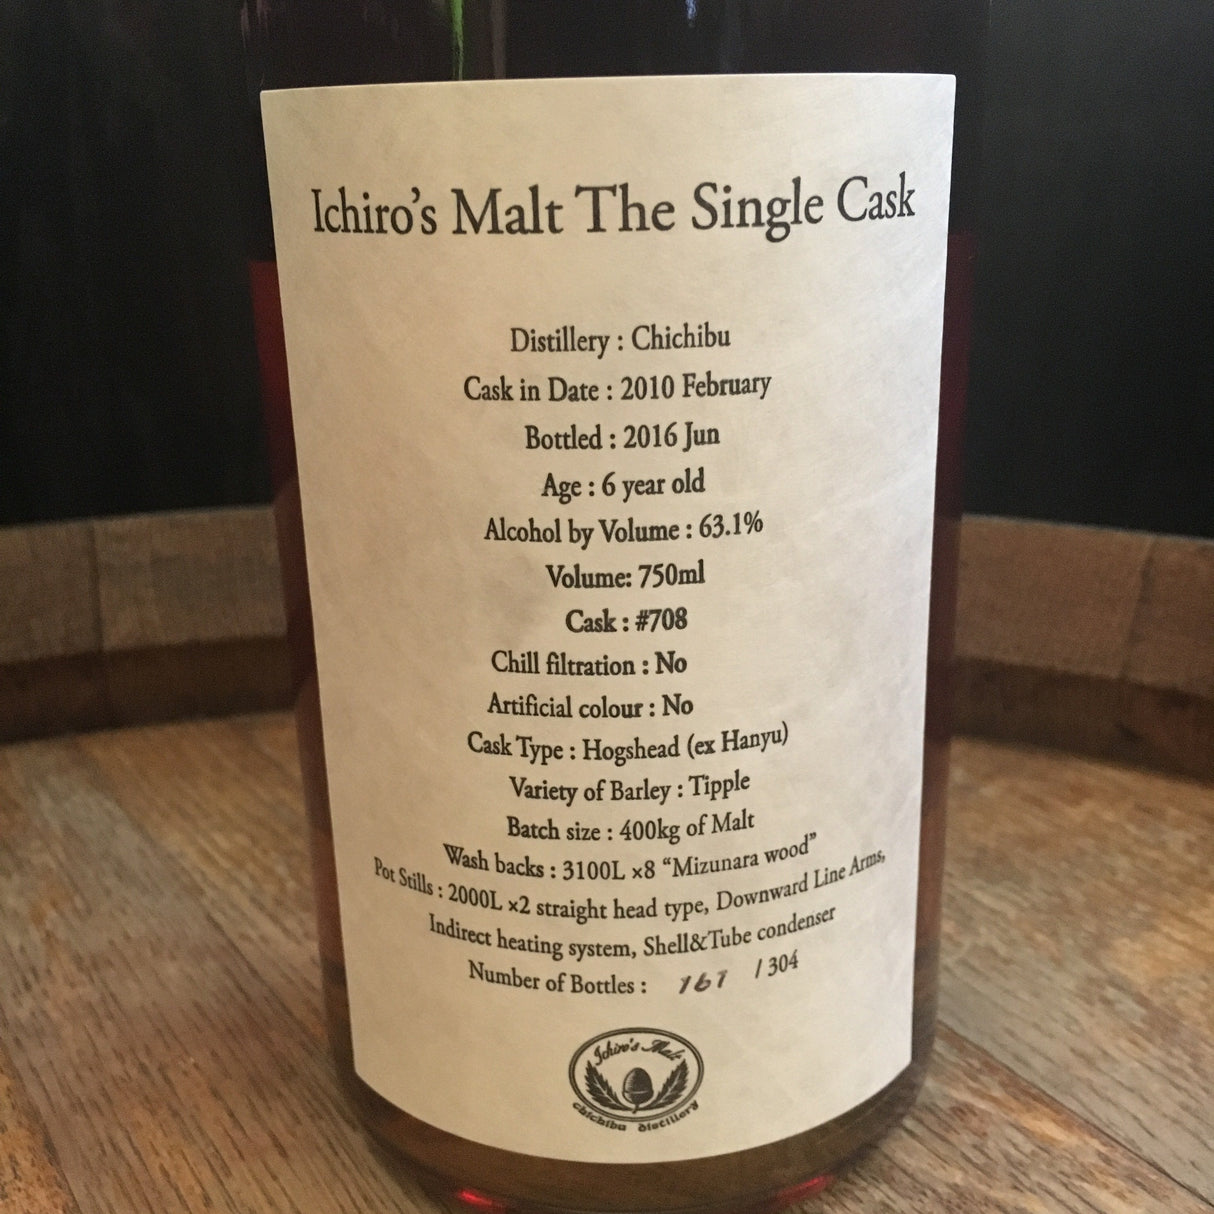 Chichibu Distillery Ichiro's Malt The Single Cask #708 Single Malt Japanese Whisky - De Wine Spot | DWS - Drams/Whiskey, Wines, Sake